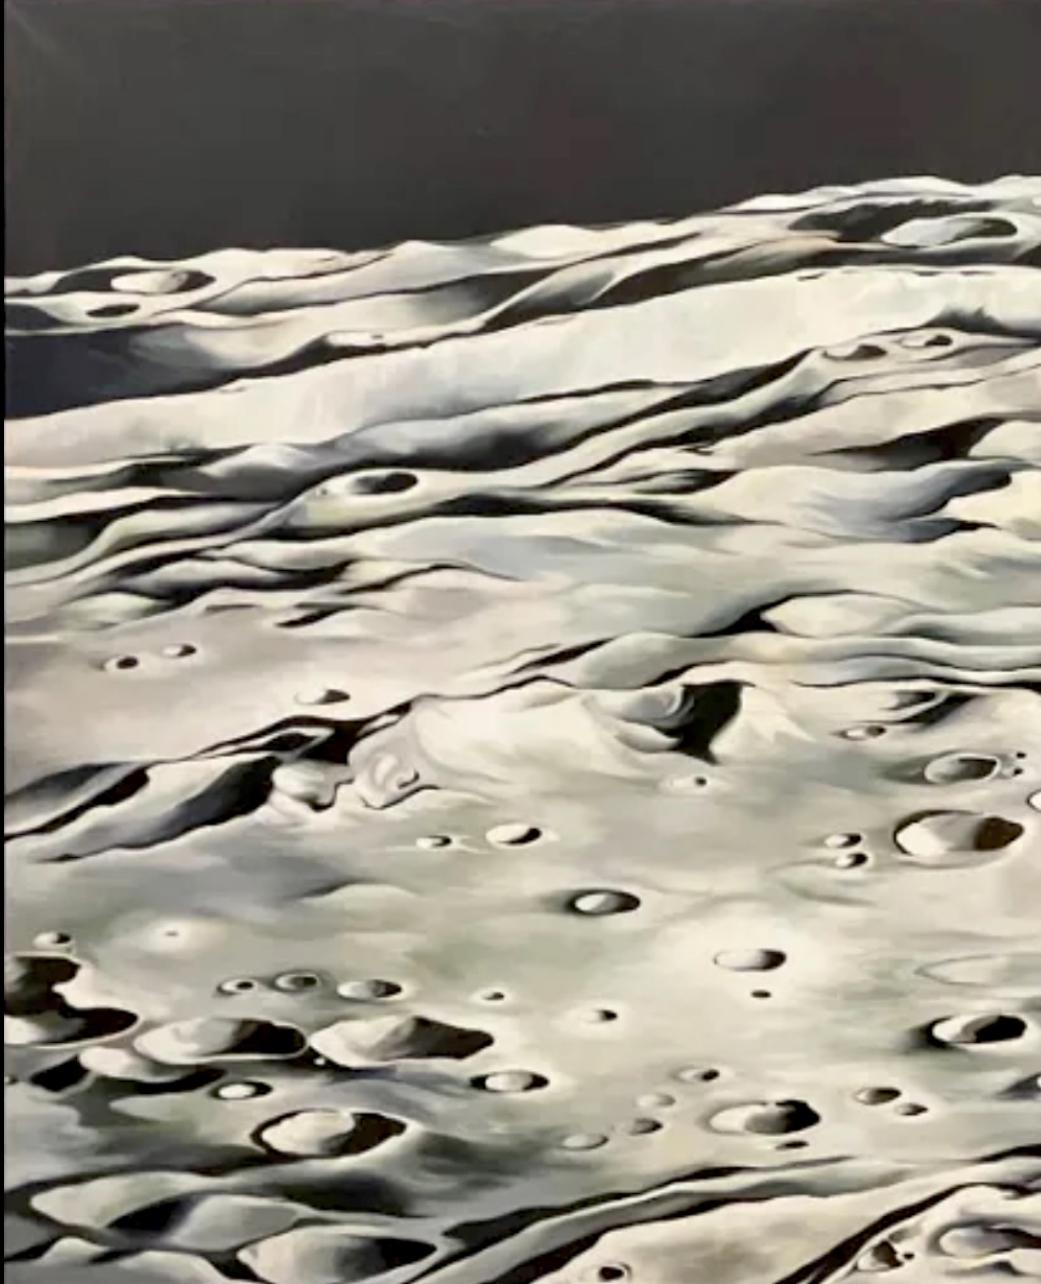 Moon Shot (NASA official commission—74 x 114 inches), Lowell Nesbitt 1